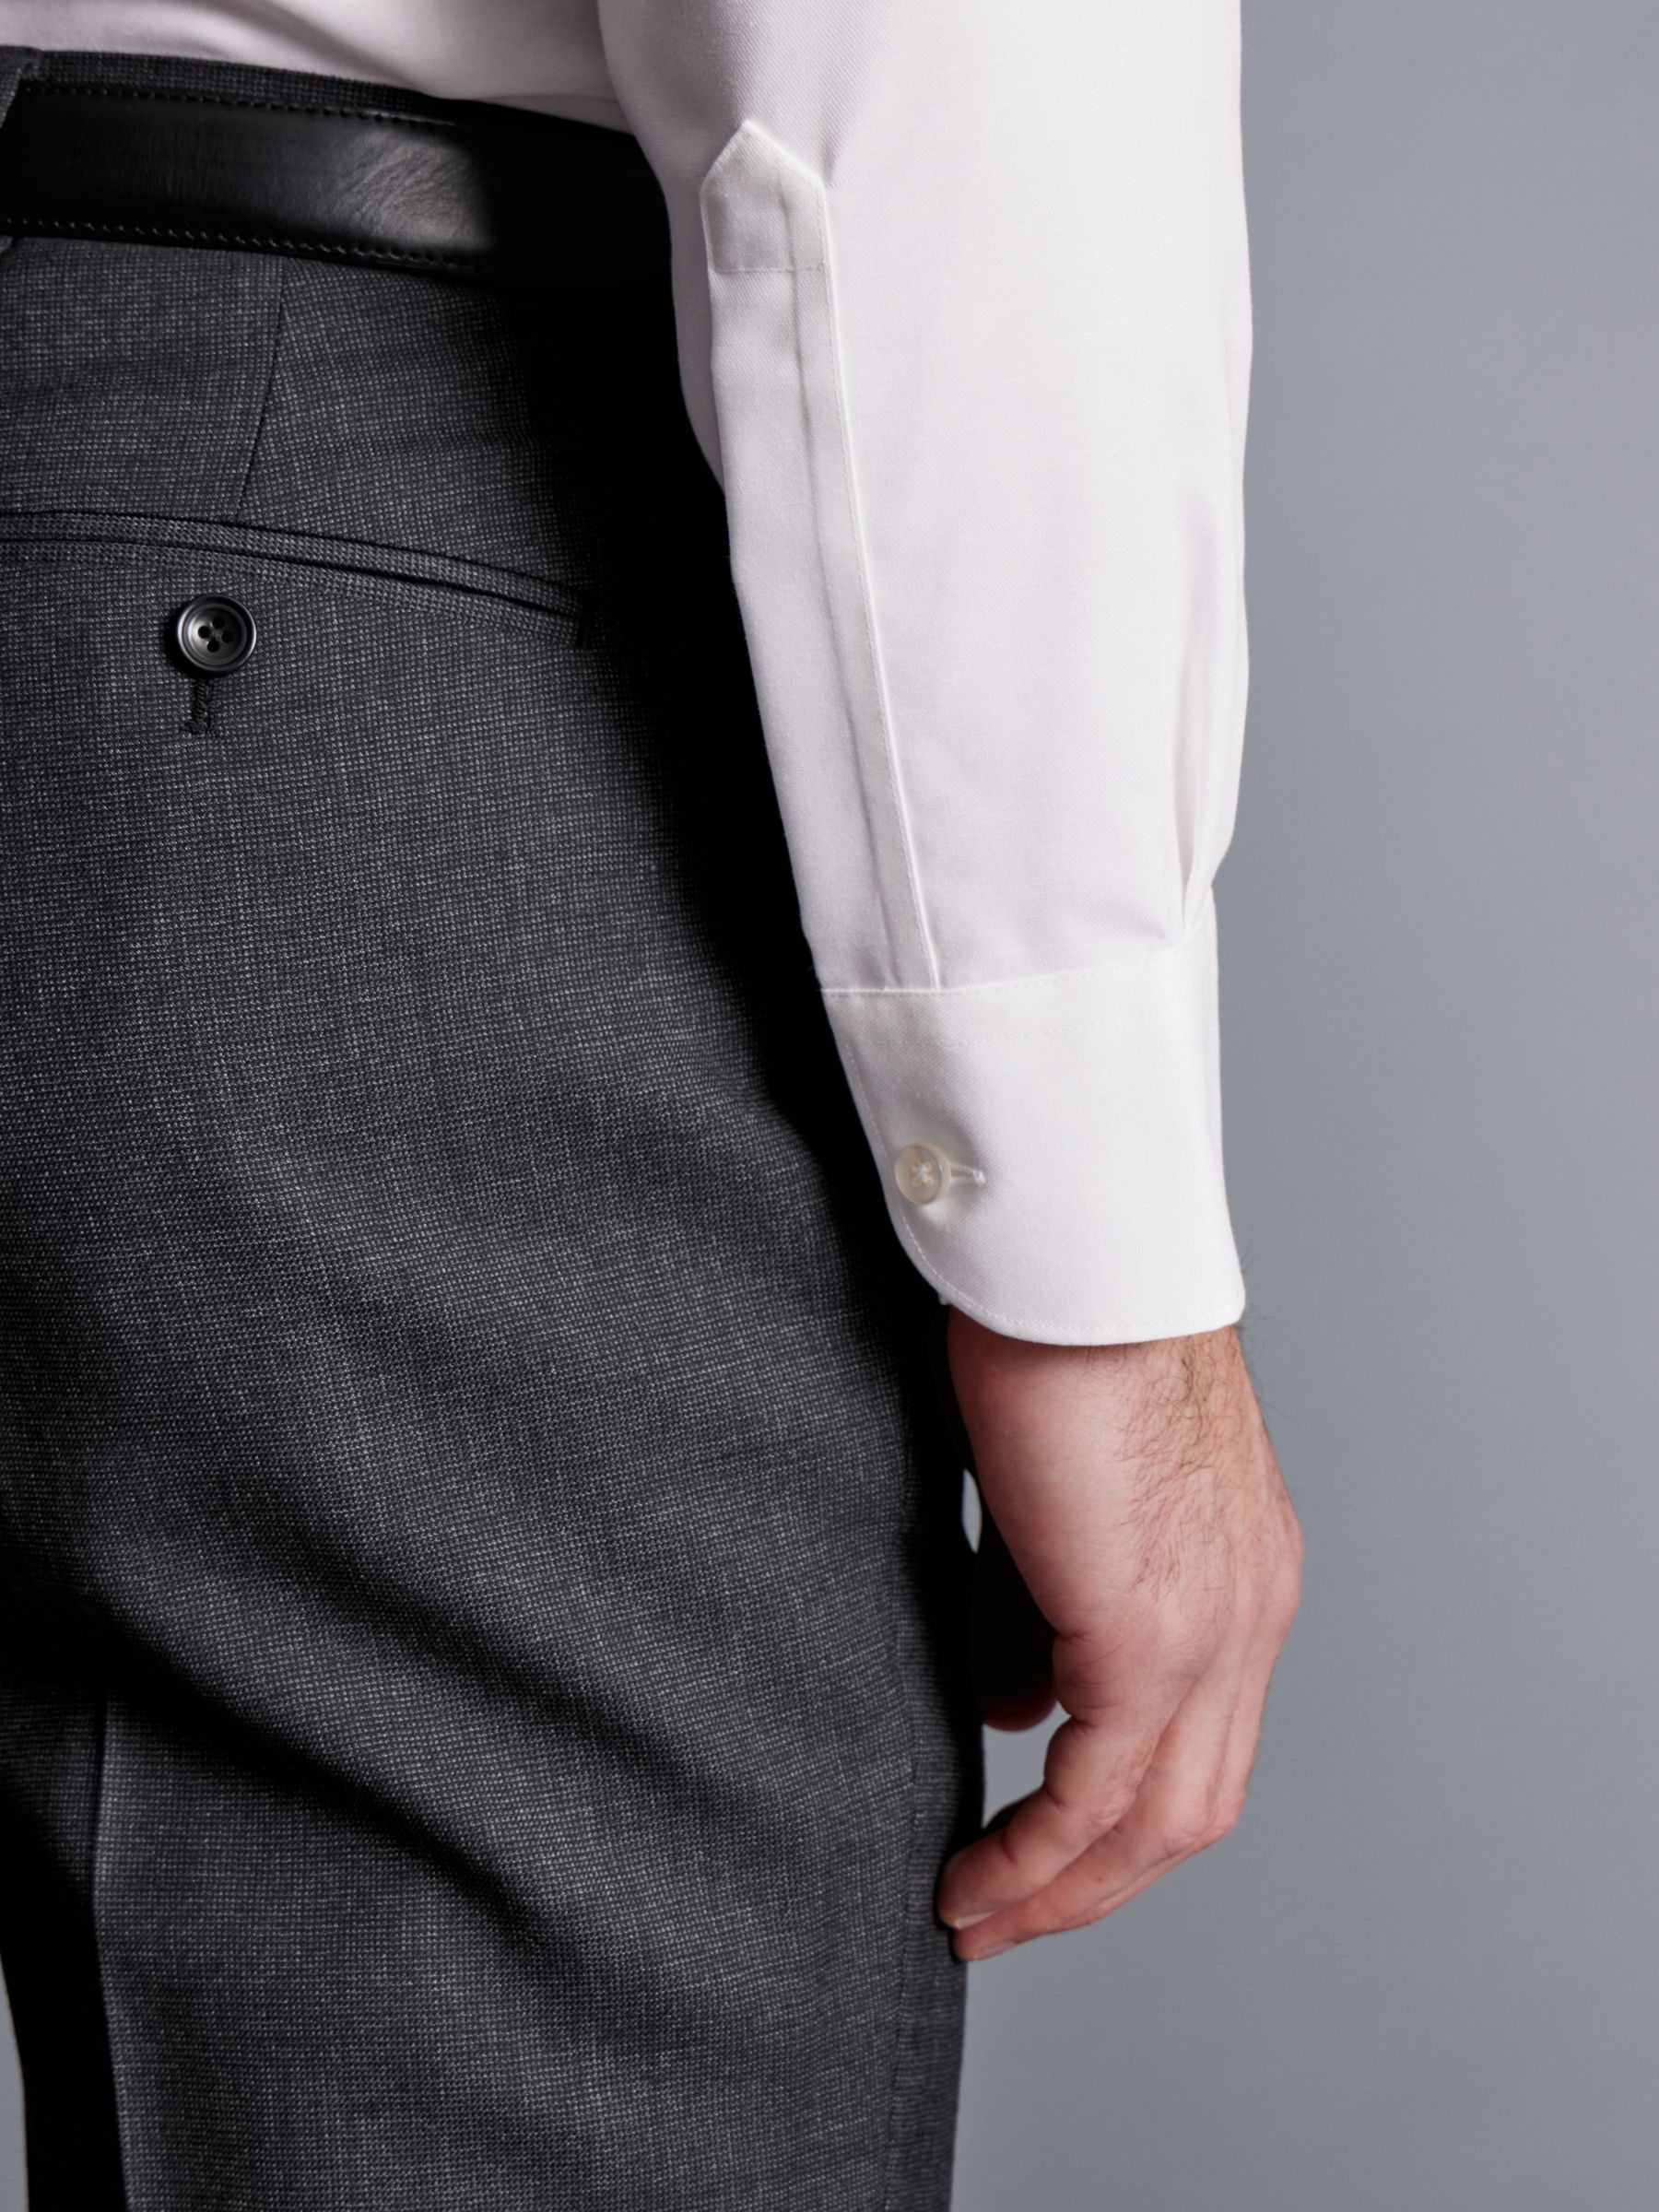 Charles Tyrwhitt Non-Iron Cotton Linen Plain Slim Fit Shirt, White, 16.5